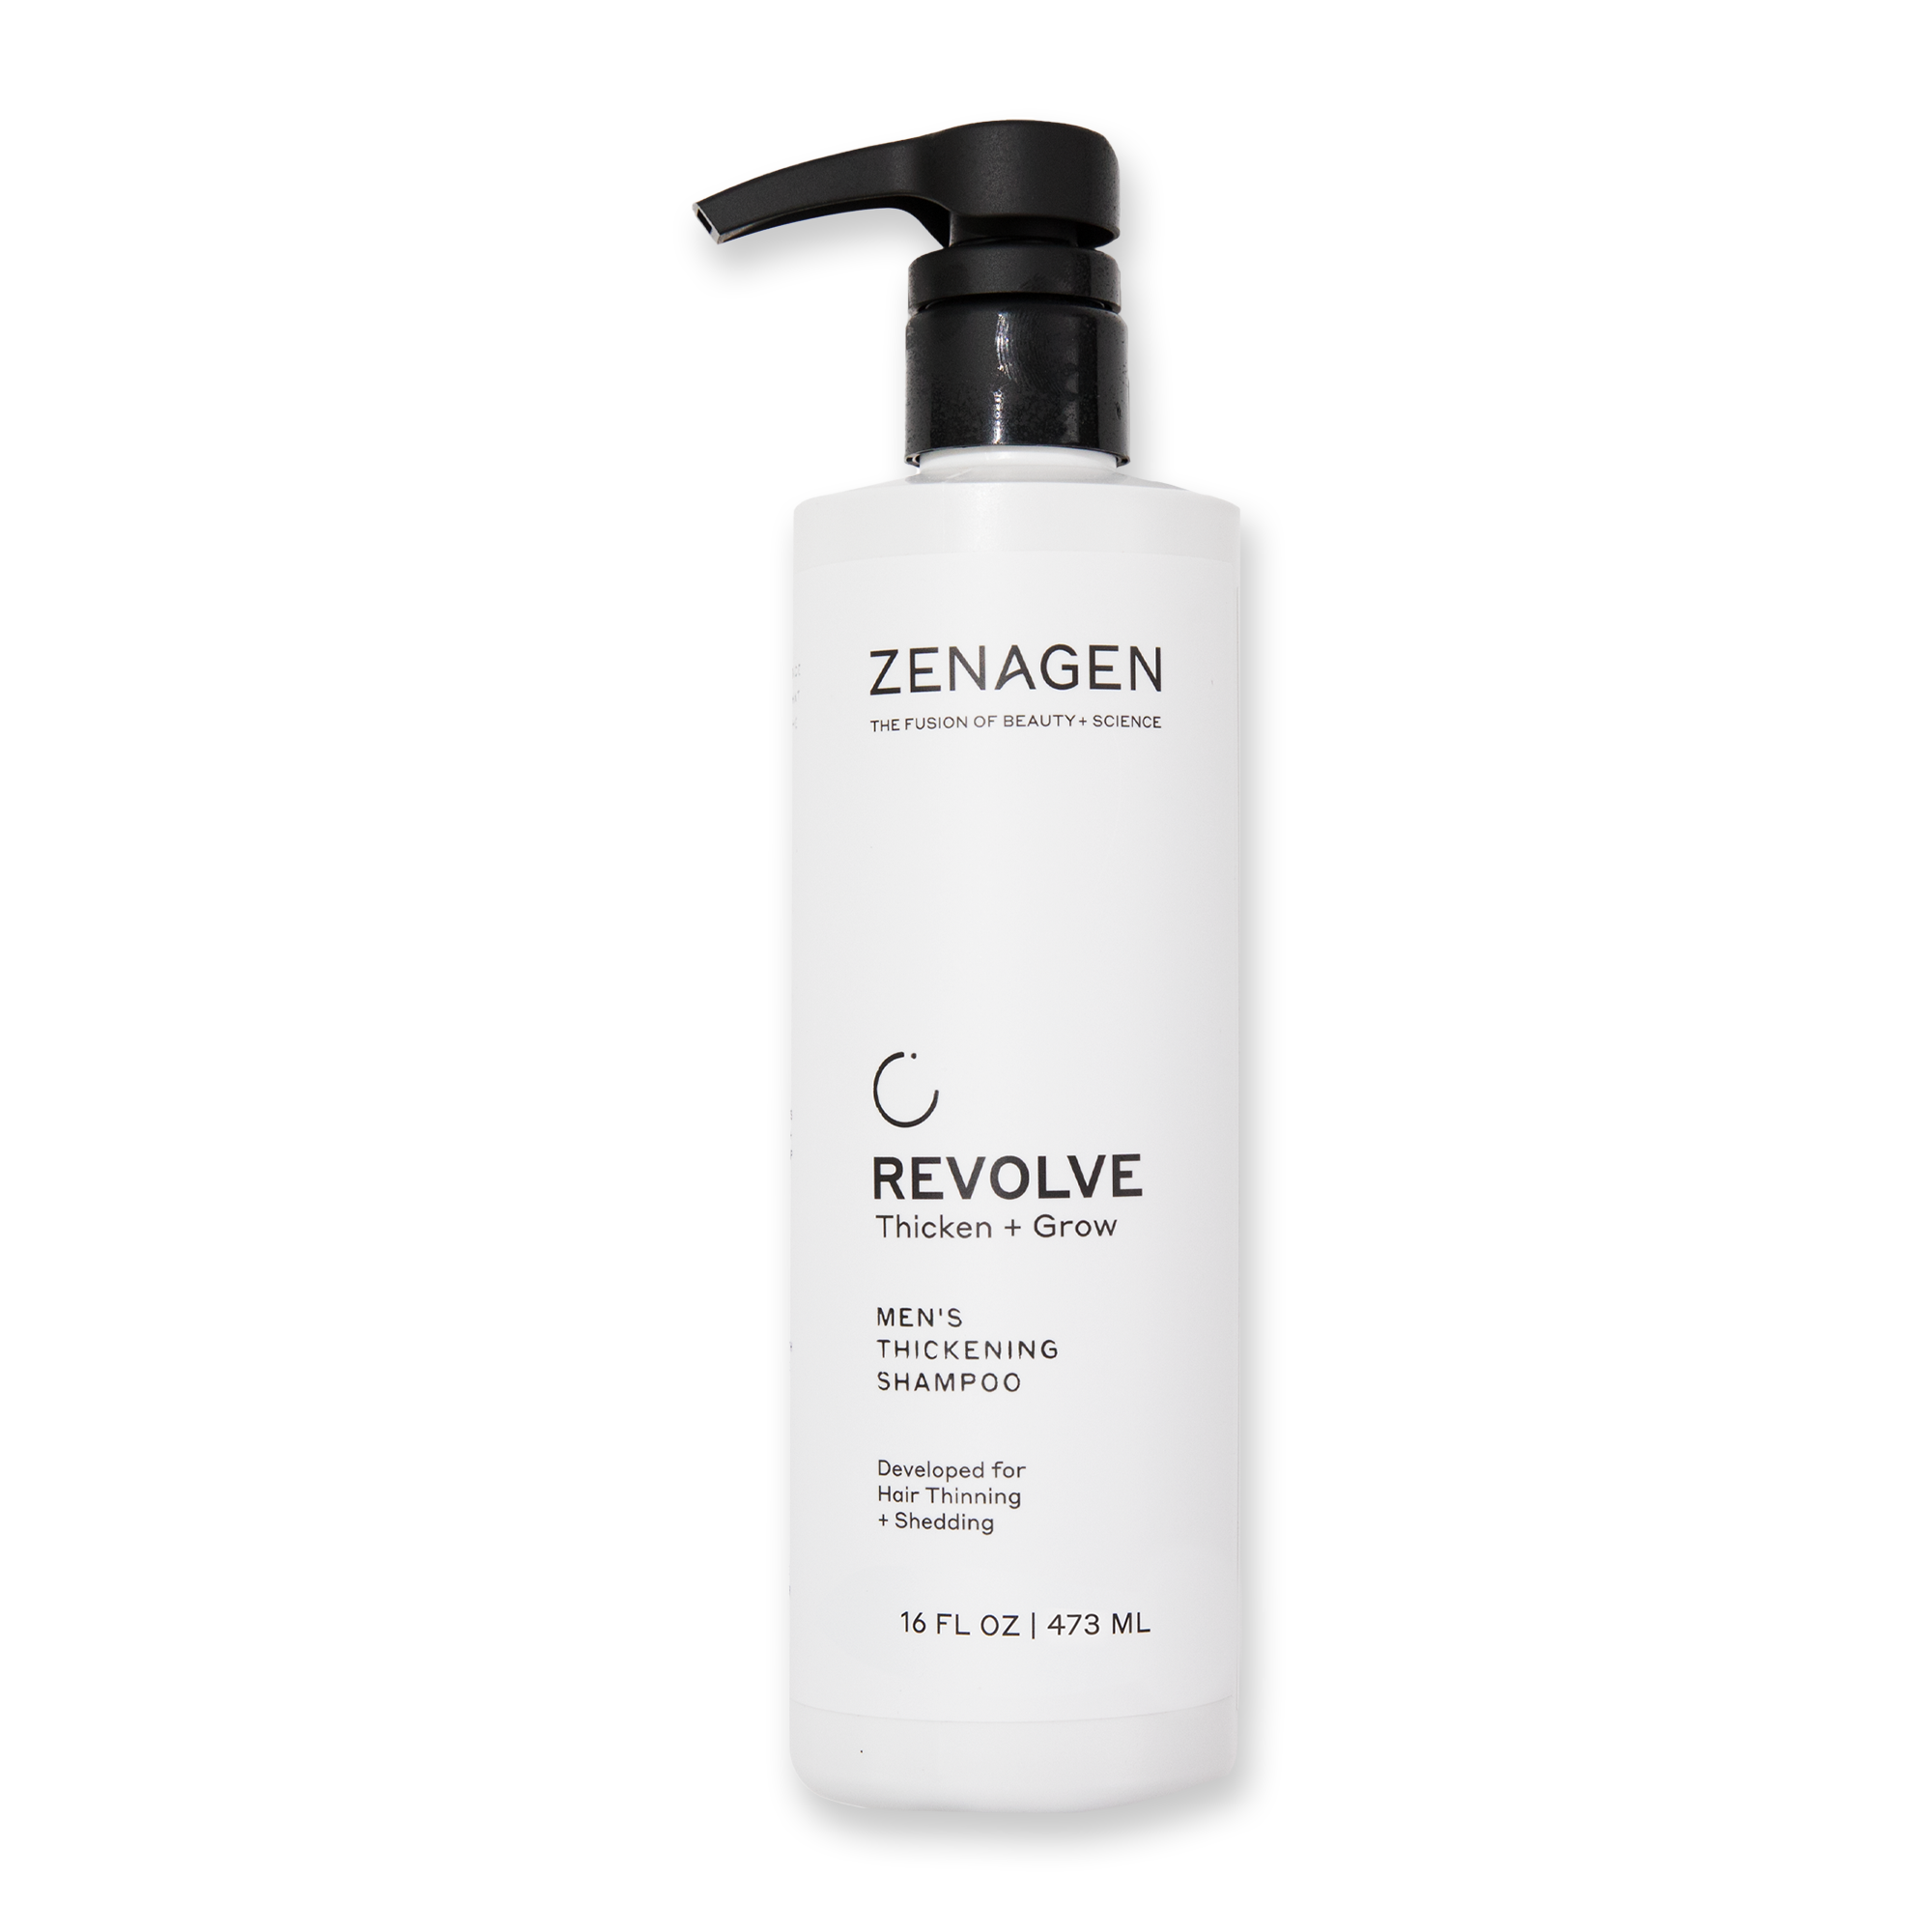 Zenagen Revolve Men's Hair Loss Shampoo and Conditioner Duo 16oz / 16OZ